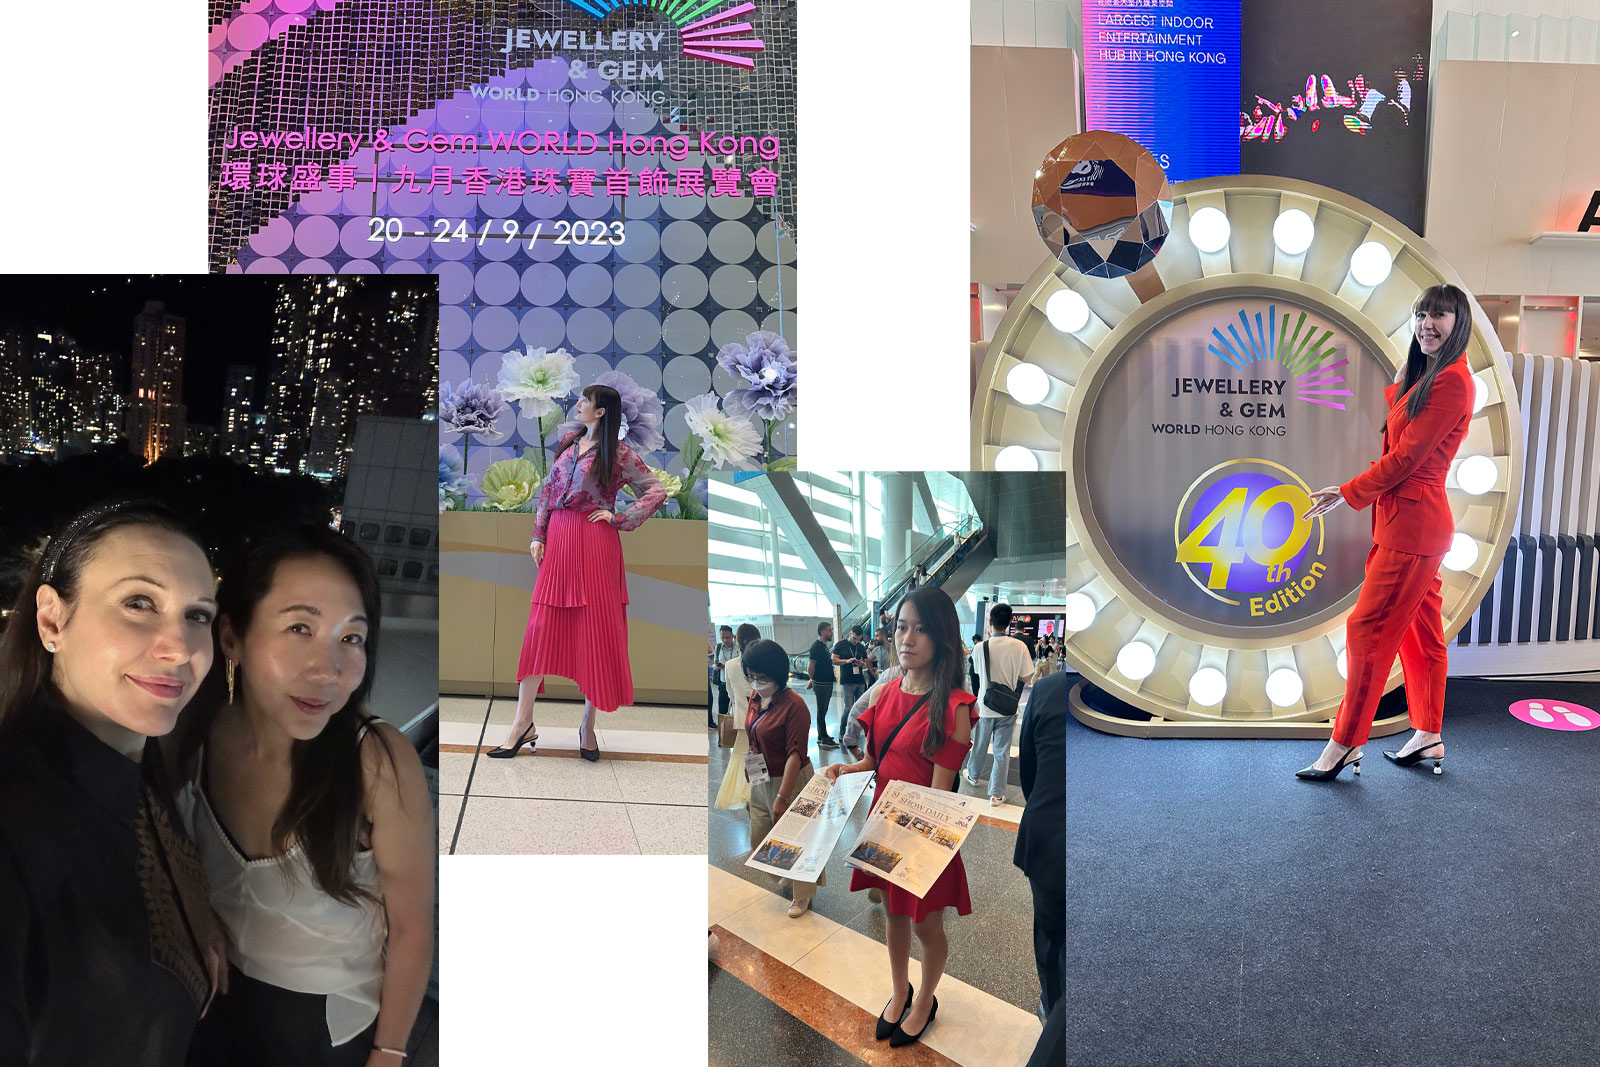 Katerina Perez enjoys a memorable return visit to Jewellery & Gem World Hong Kong in 2023